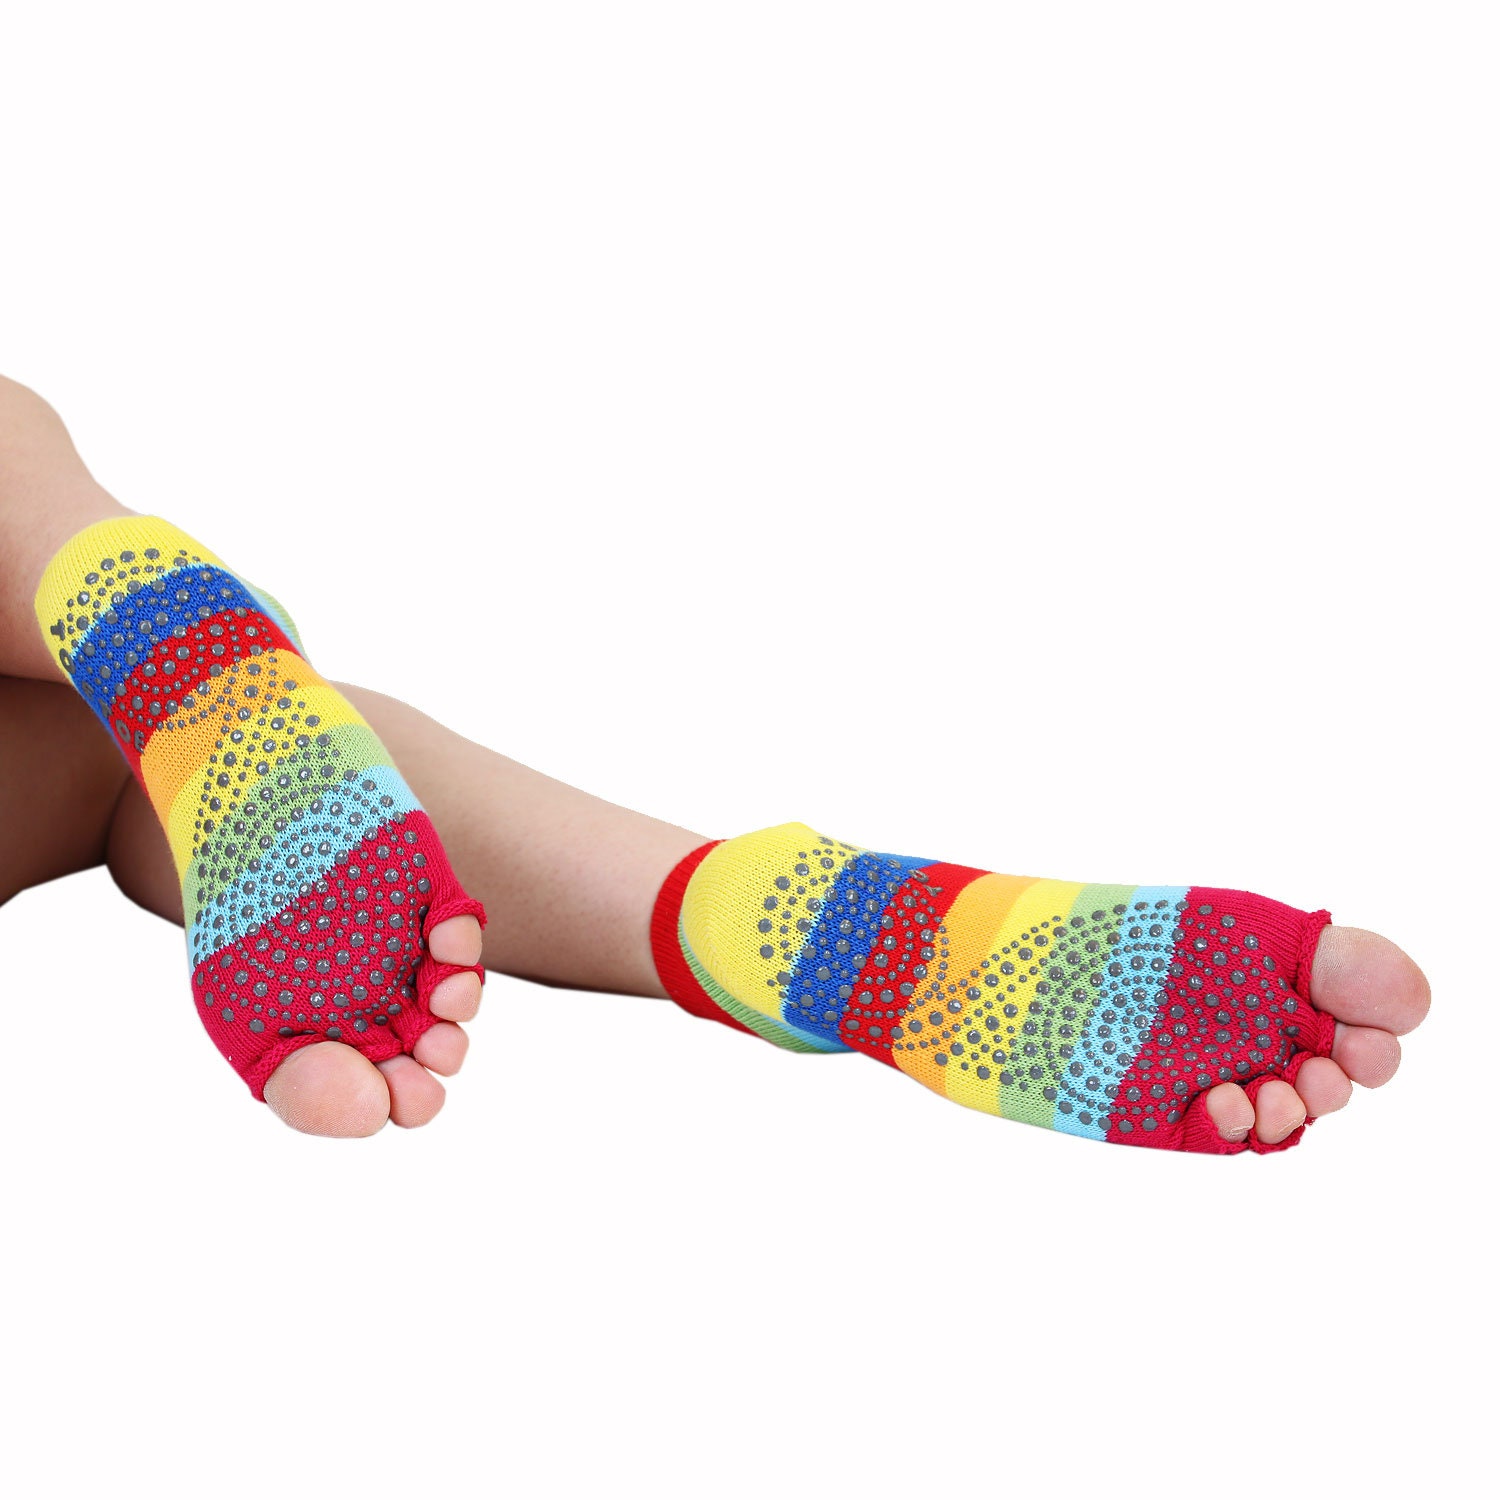 TOETOE Men, Women Yoga&pilates Stretchy Soft Cotton Seamless Patterned  Anti-slip Sole Trainer Open Toe, Toe Socks, Hygienic, Breathable 